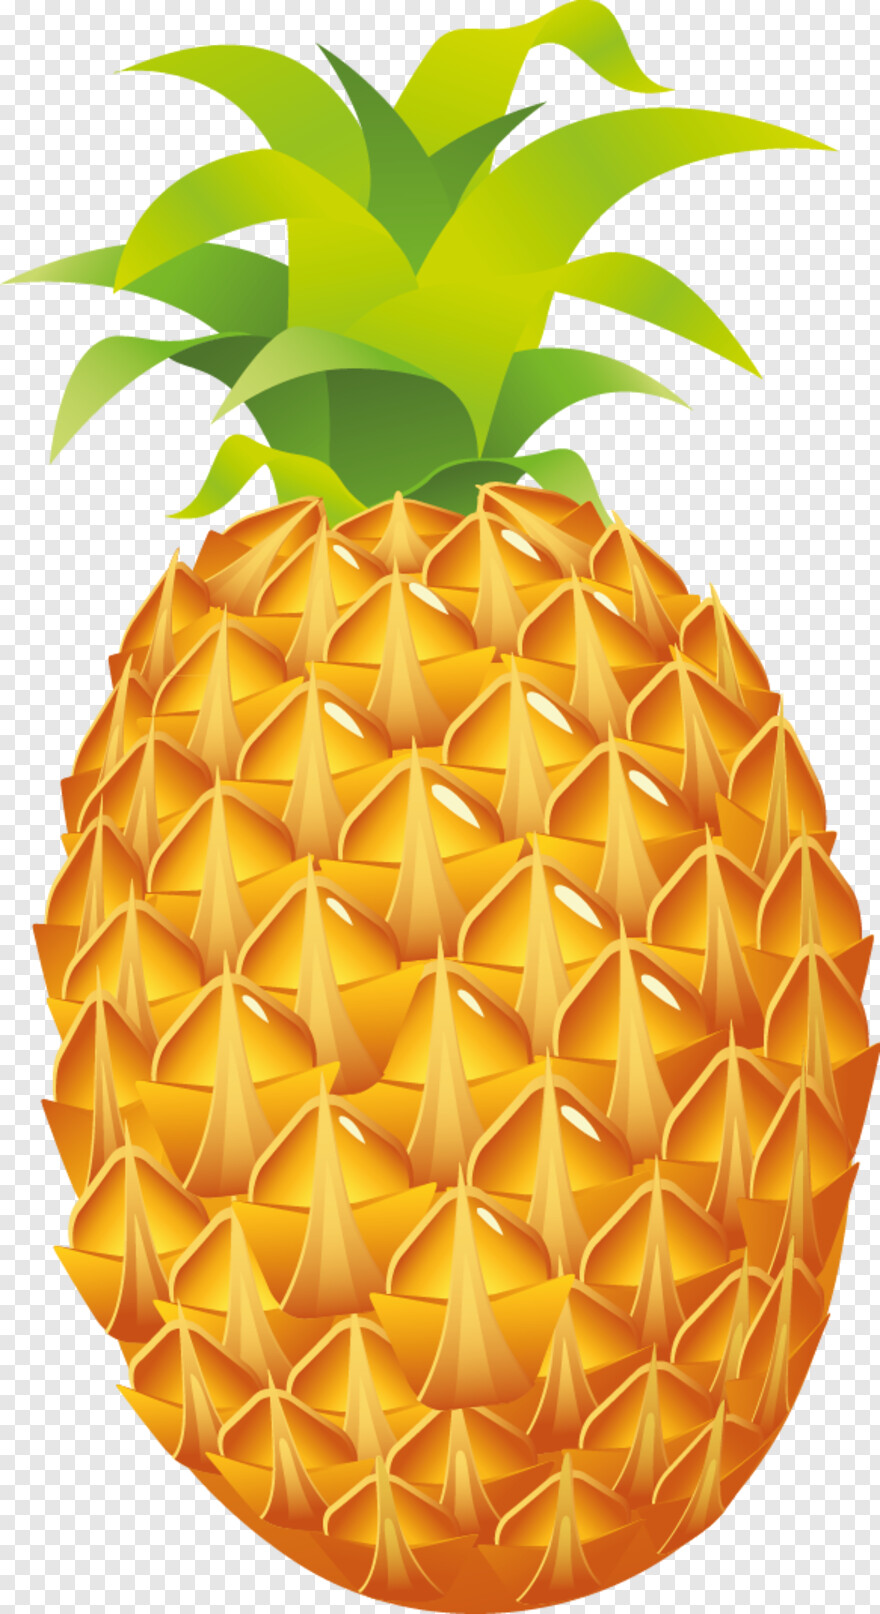 pineapple # 1000185